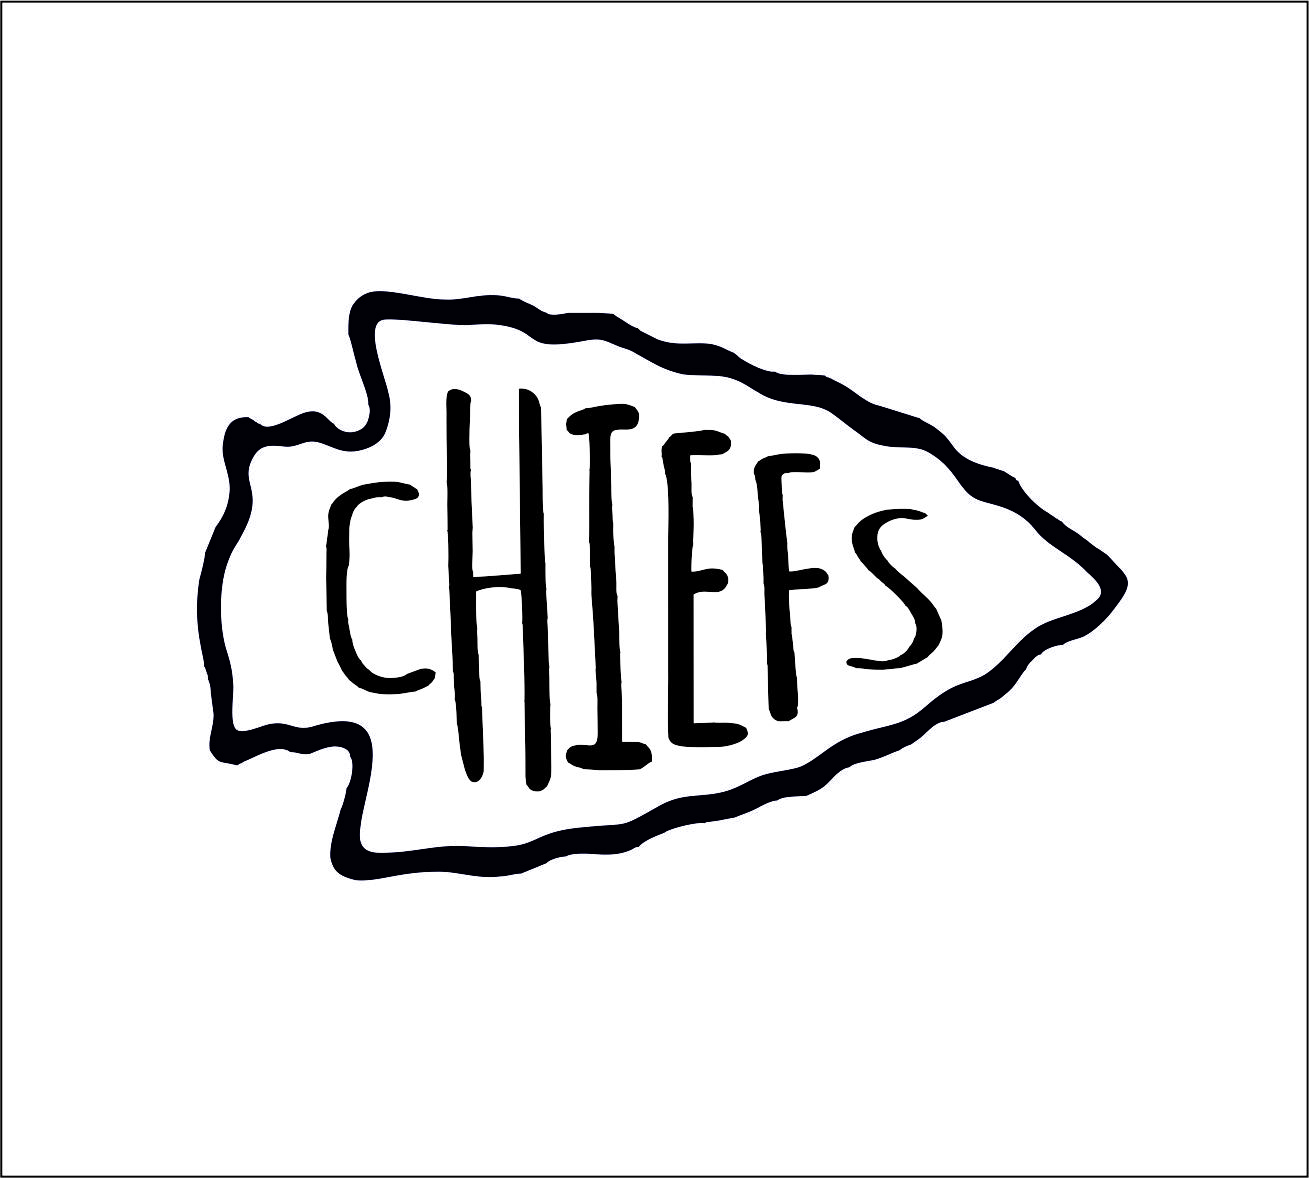 Download Kansas City Chiefs logo | SVGprinted